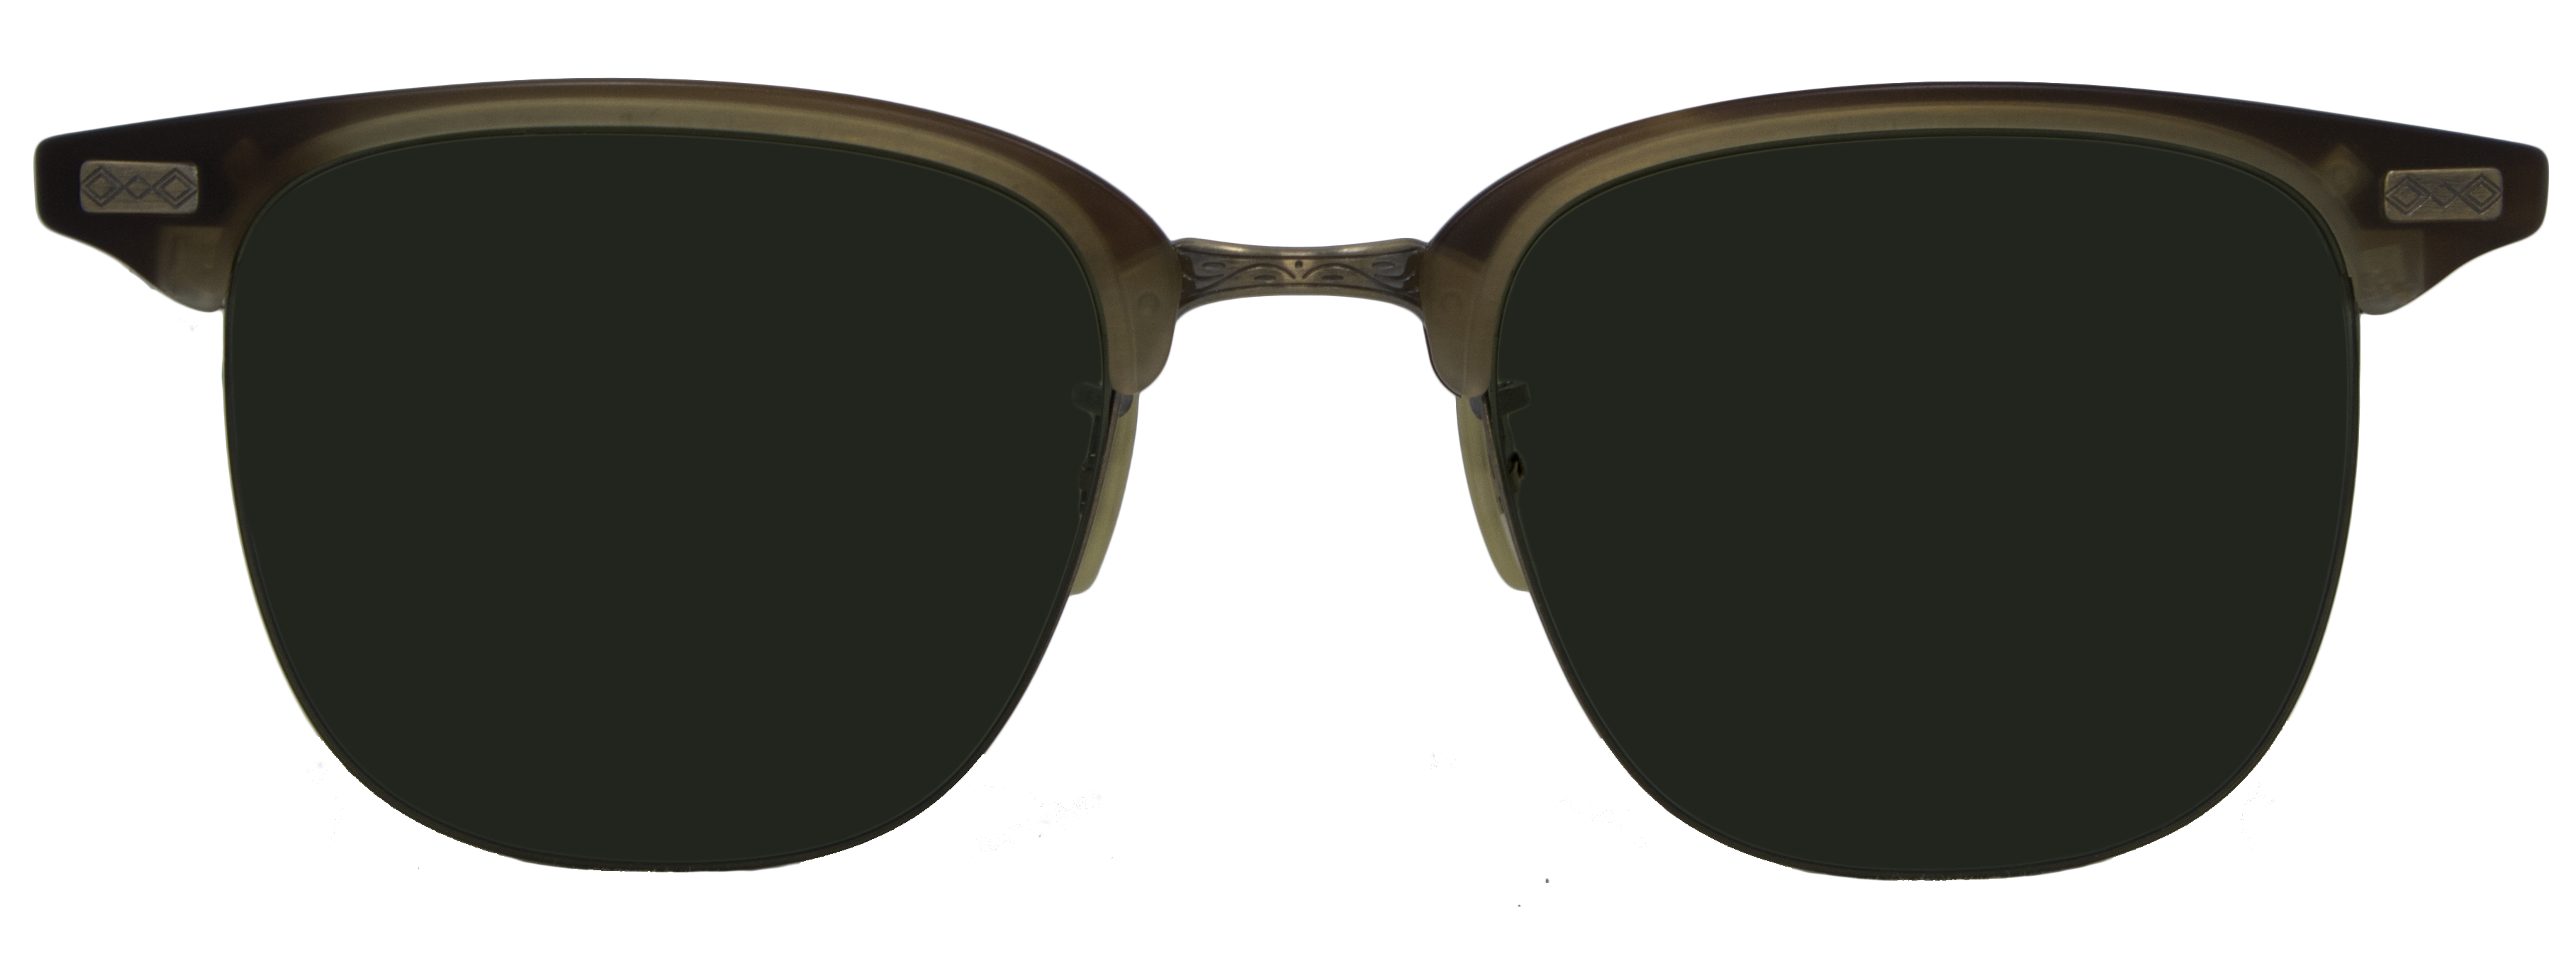 fashion, protection, sun, glass, cool sunglasses #10824